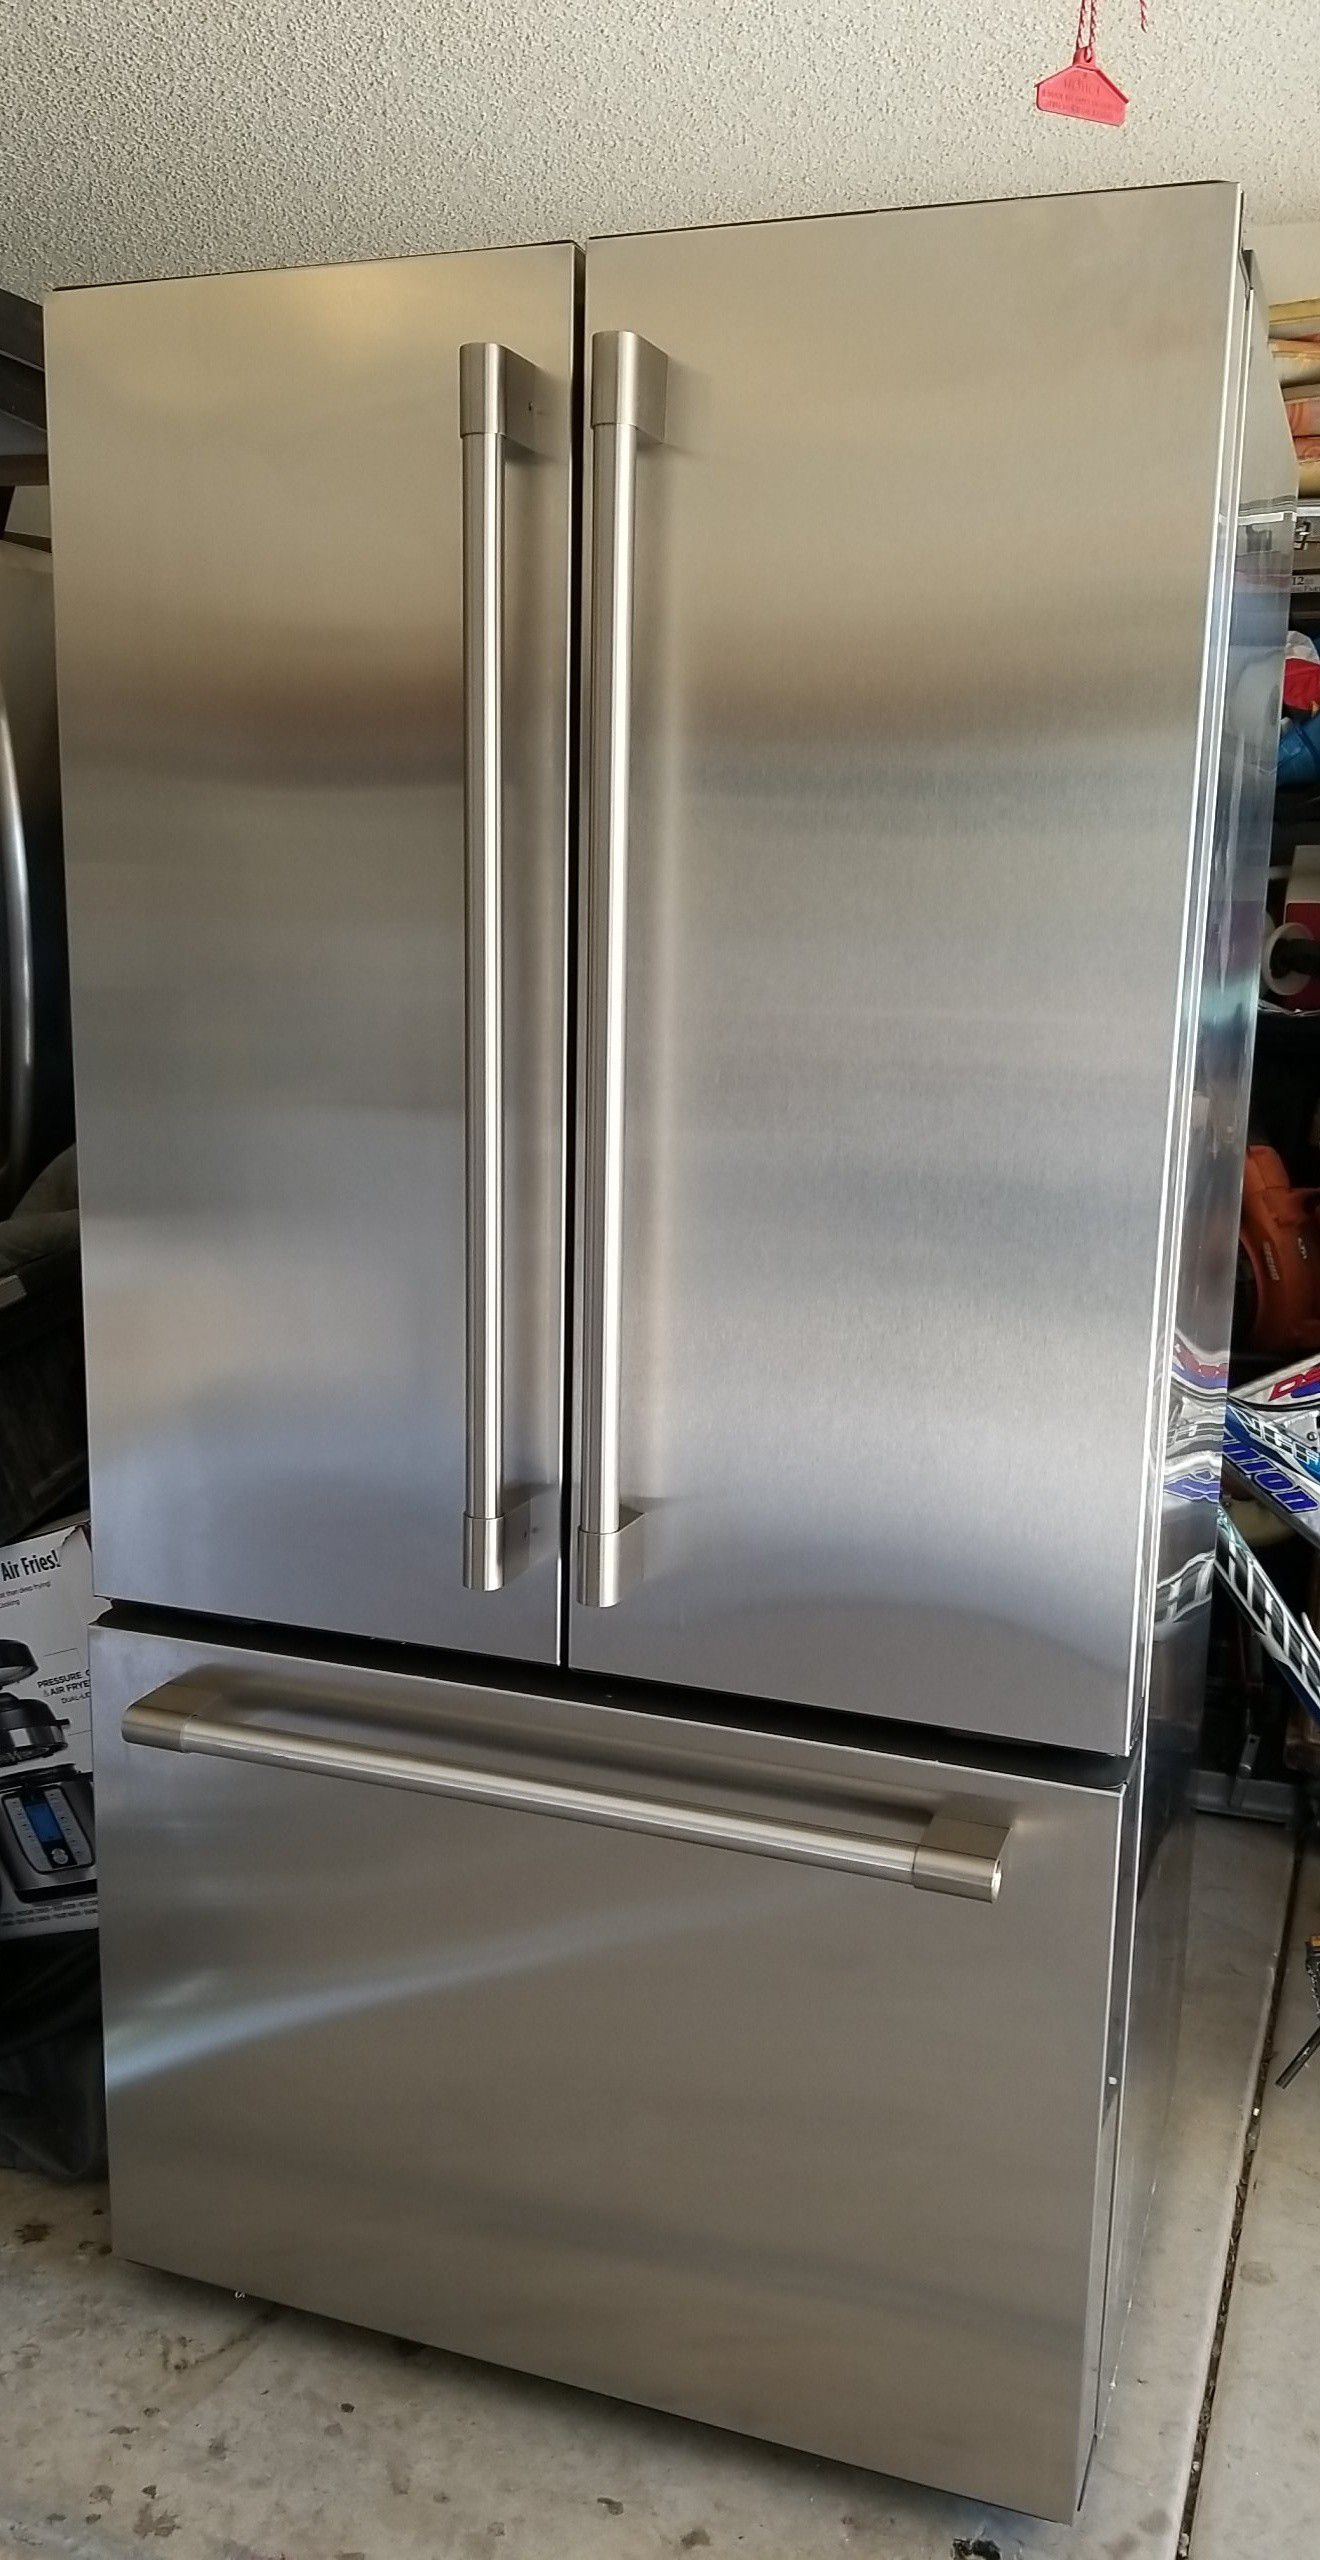 27.0 cu. ft. French Door Refrigerator Fingerprint Resistant Stainless Steel, ENERGY STAR Model# GNE27JYMFS